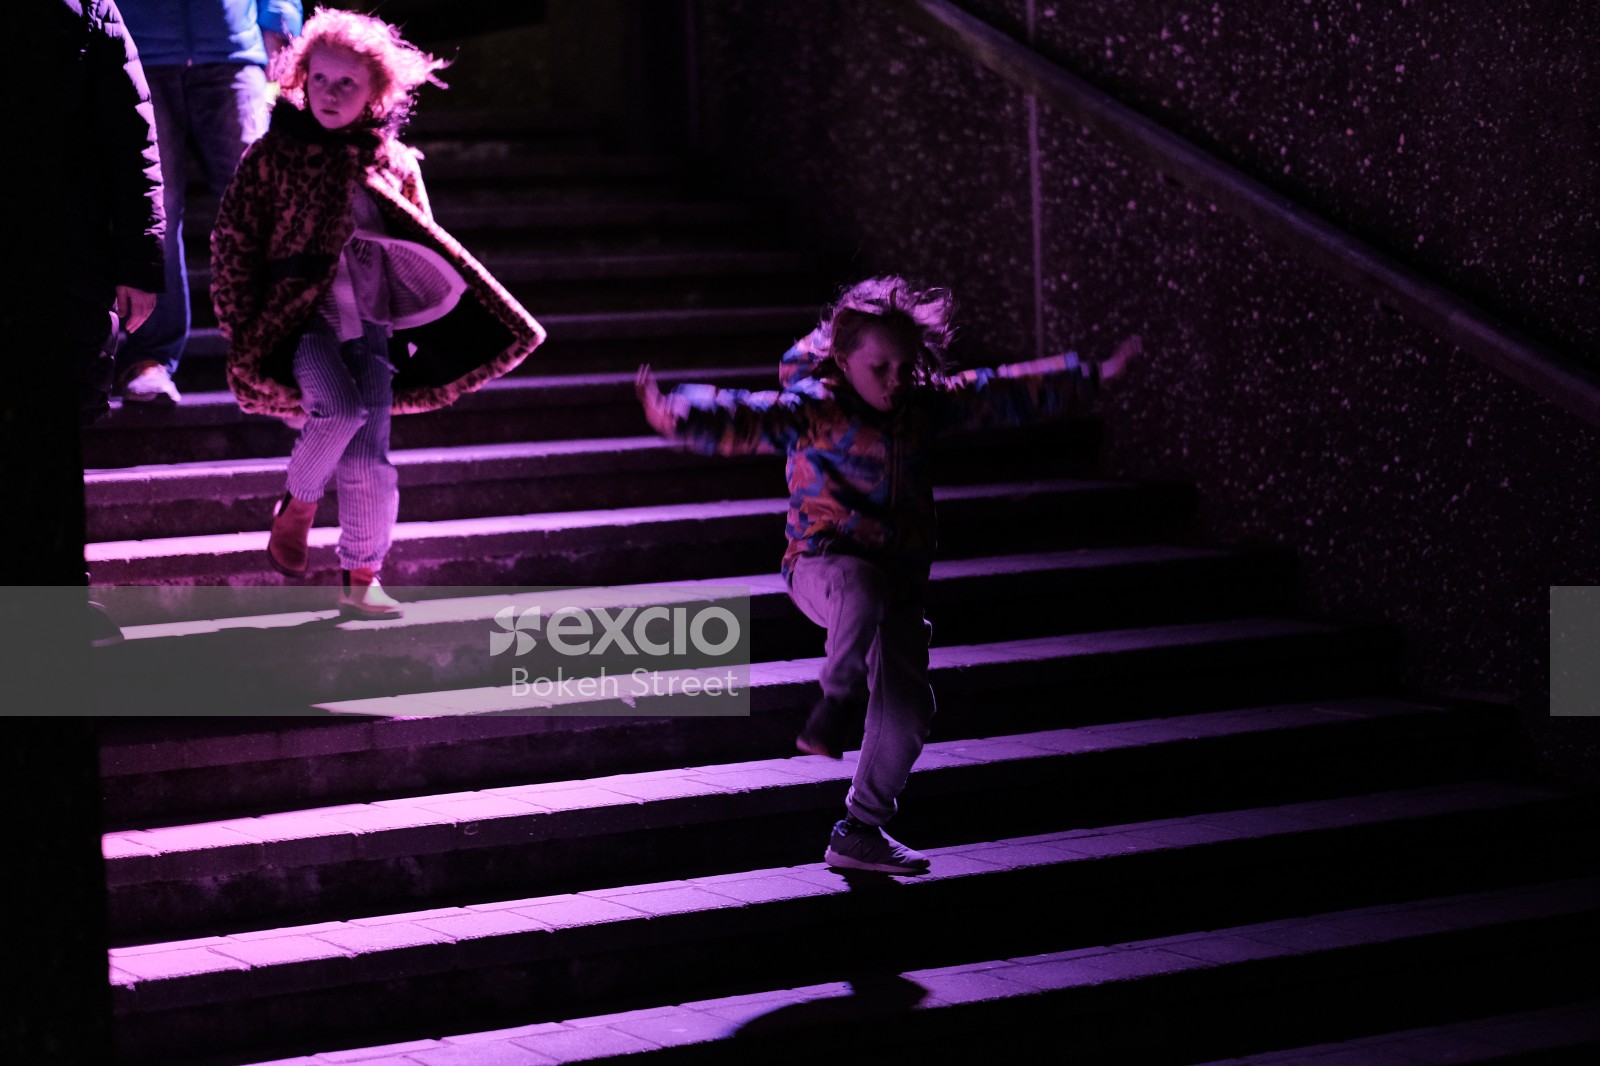 Children descending on purple lit steps